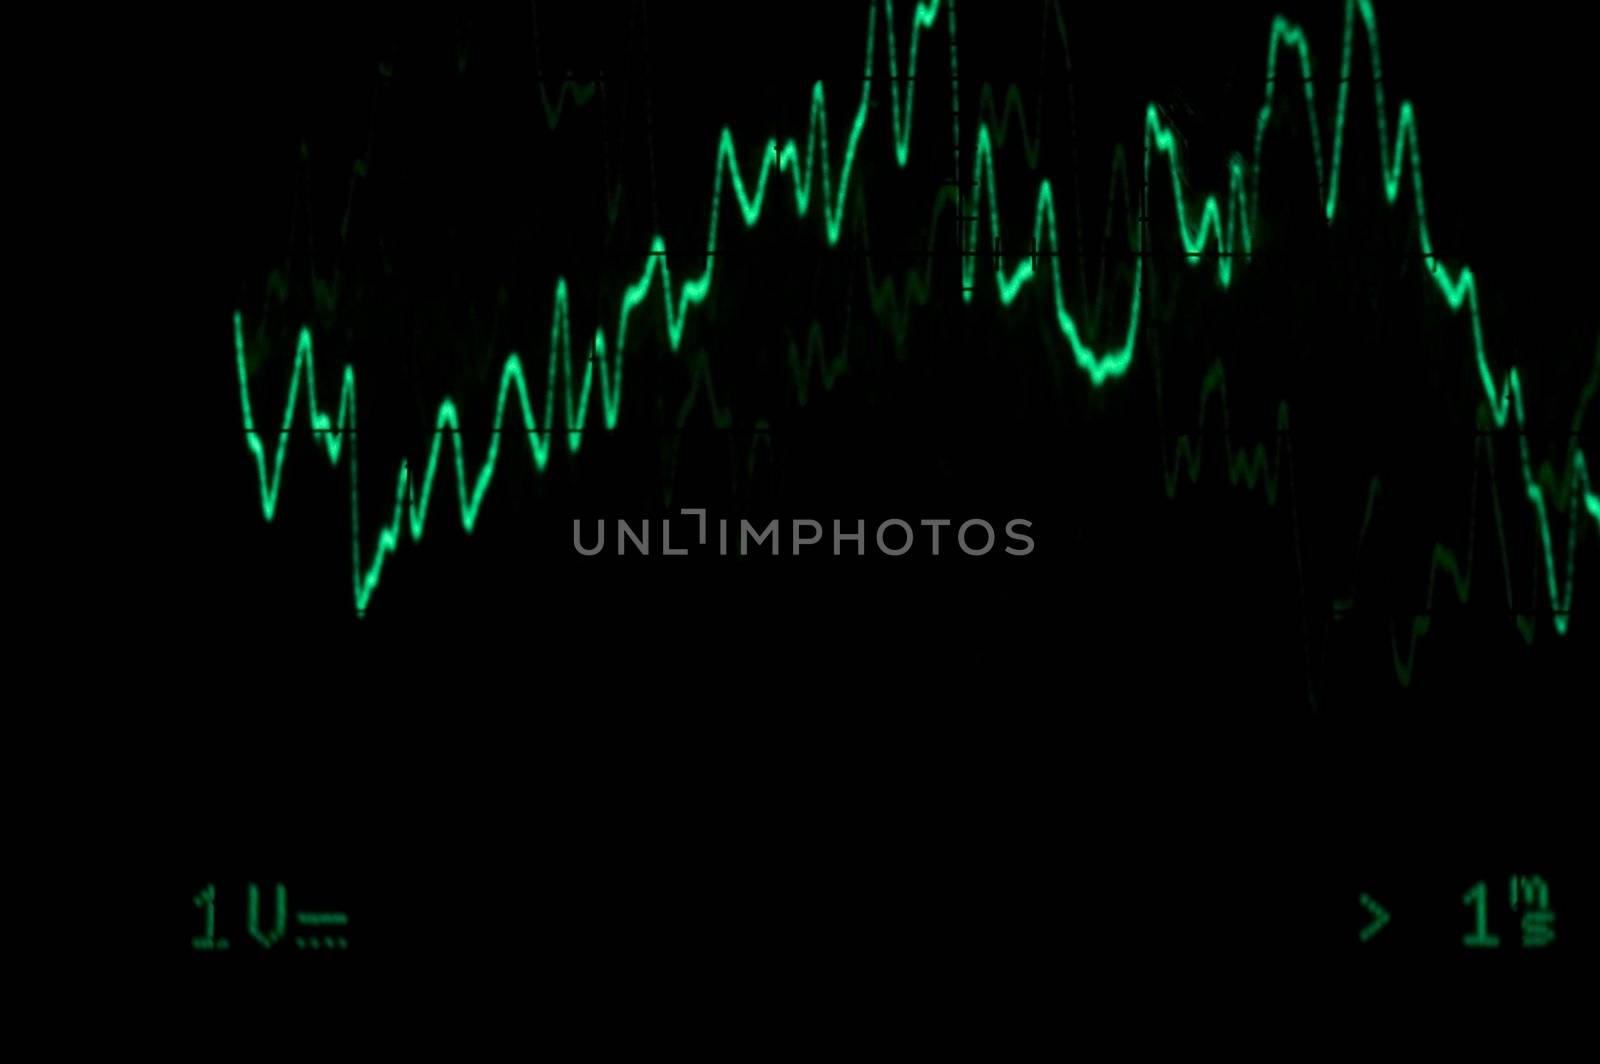 Oscilloscope waveform of some music